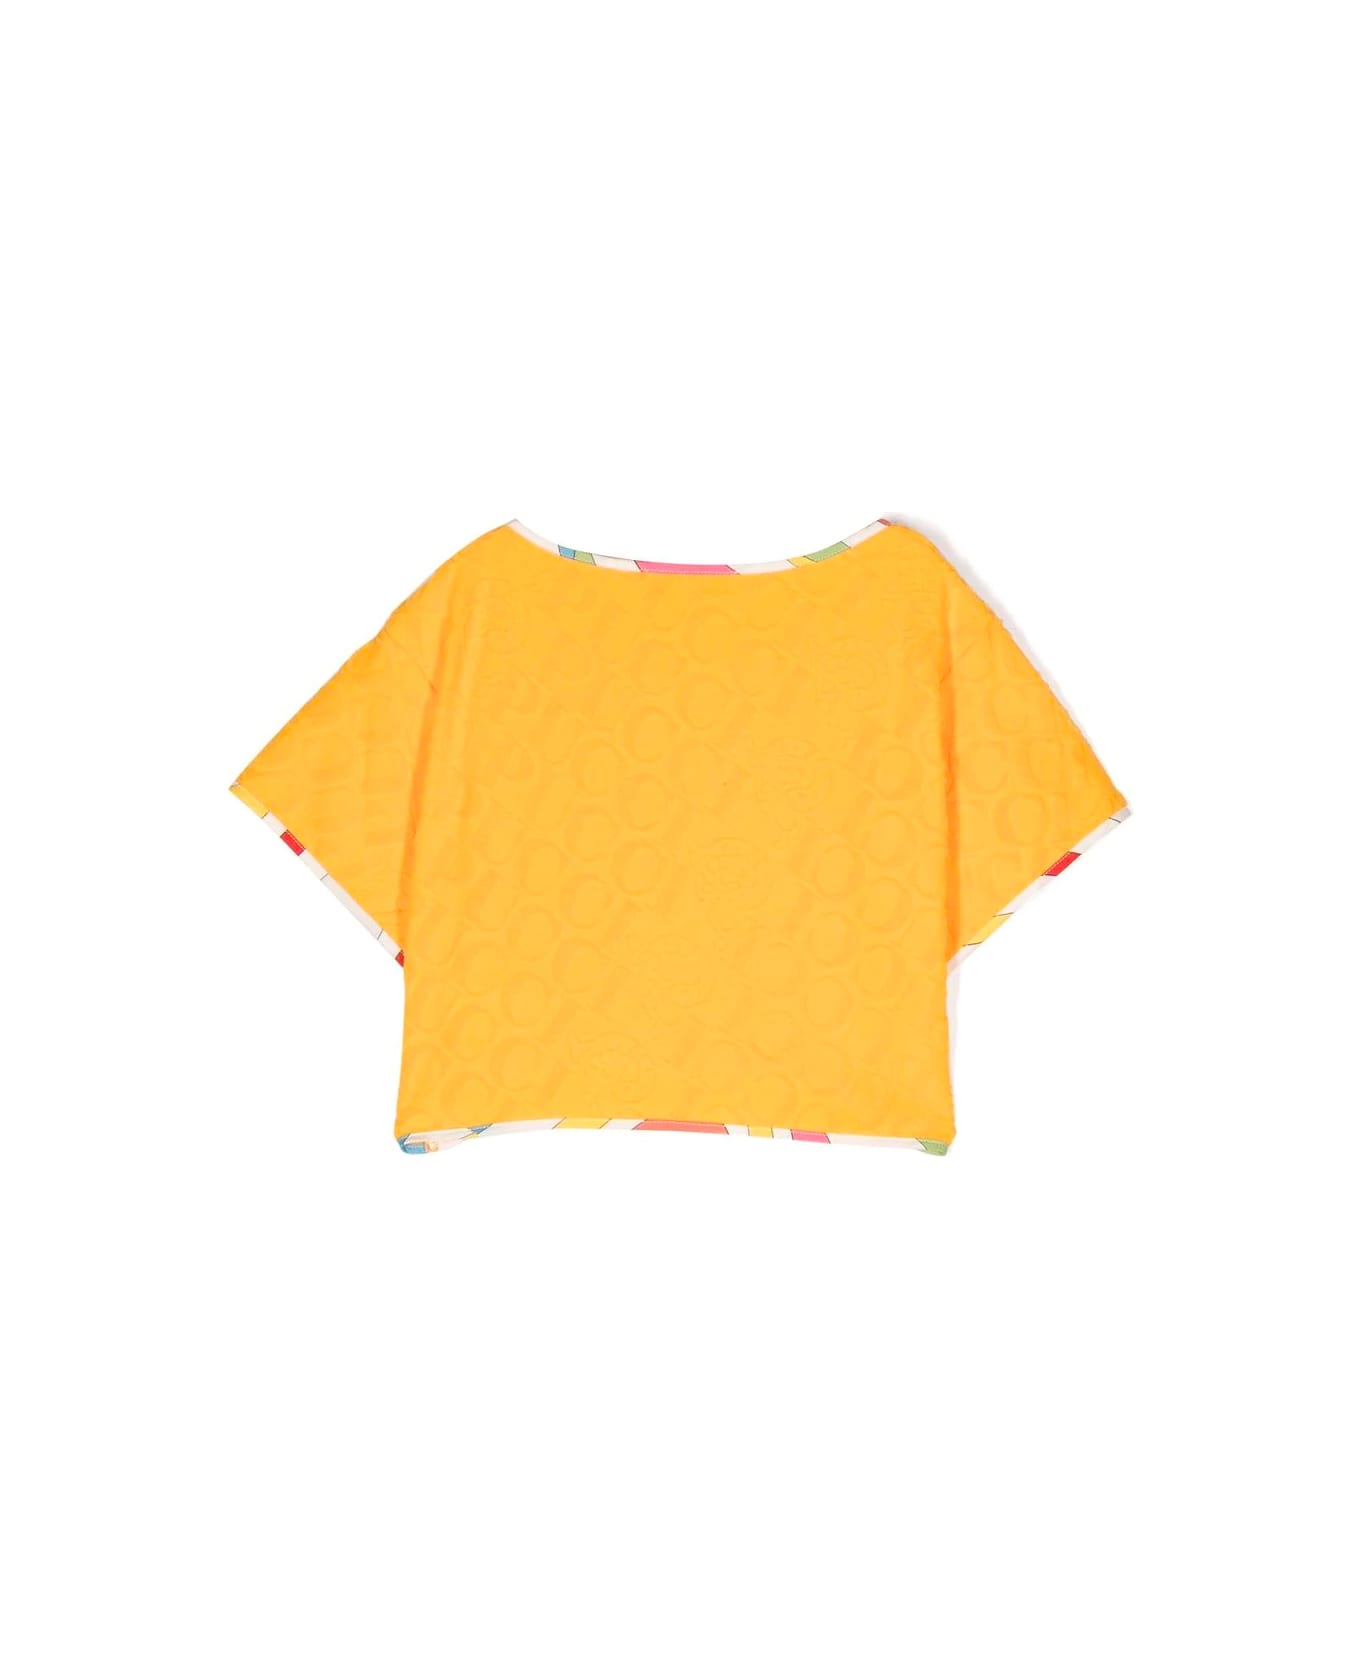 Pucci T-shirt - Mustard